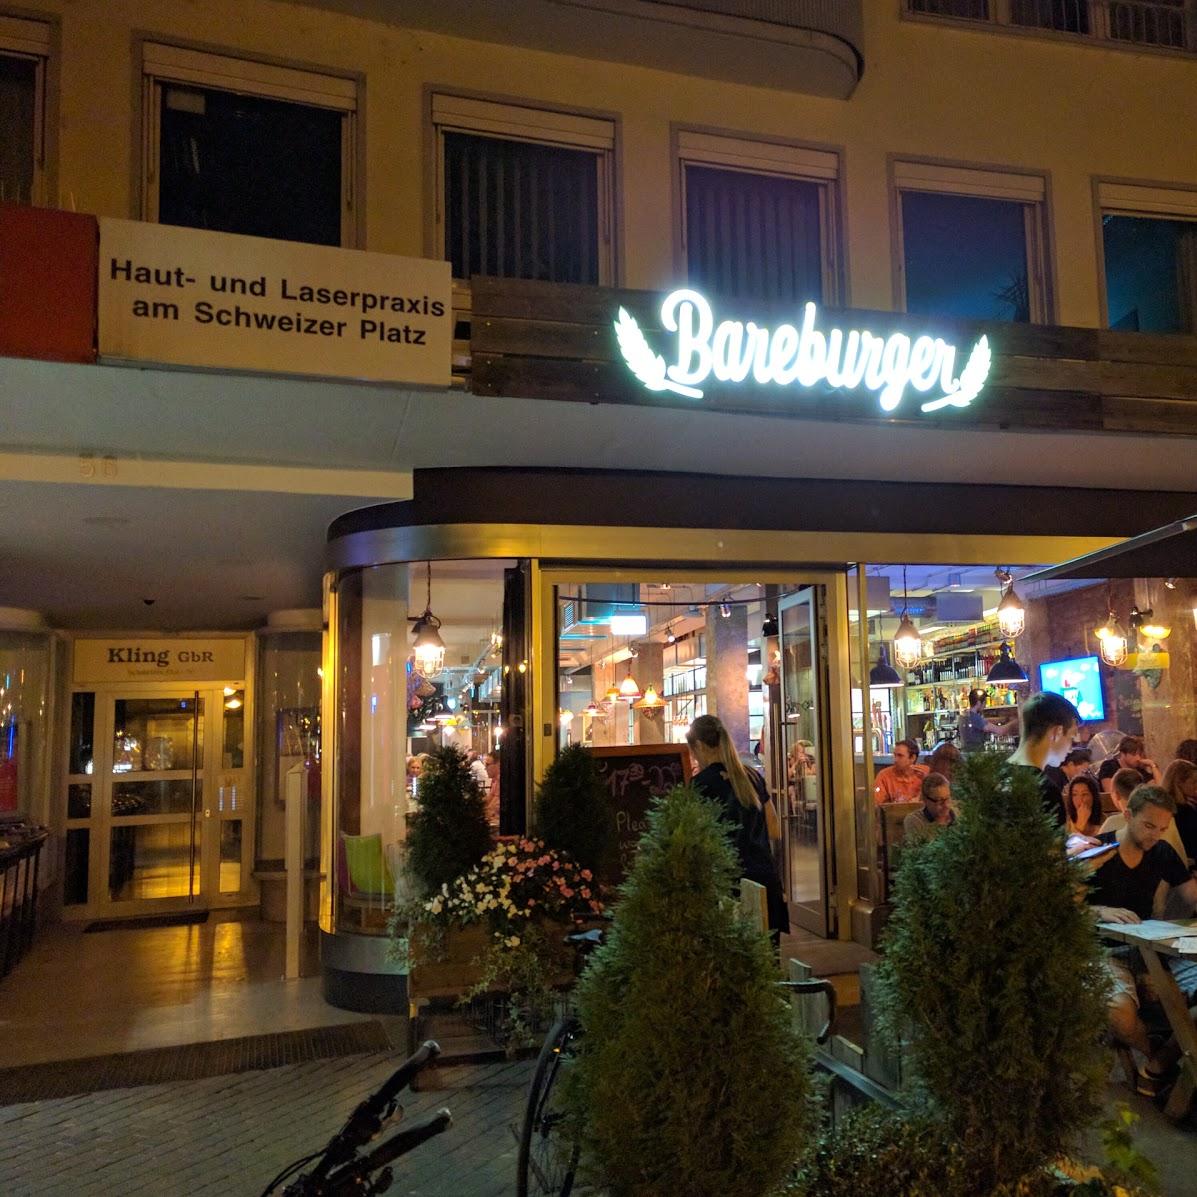 Restaurant "Bareburger" in Frankfurt am Main